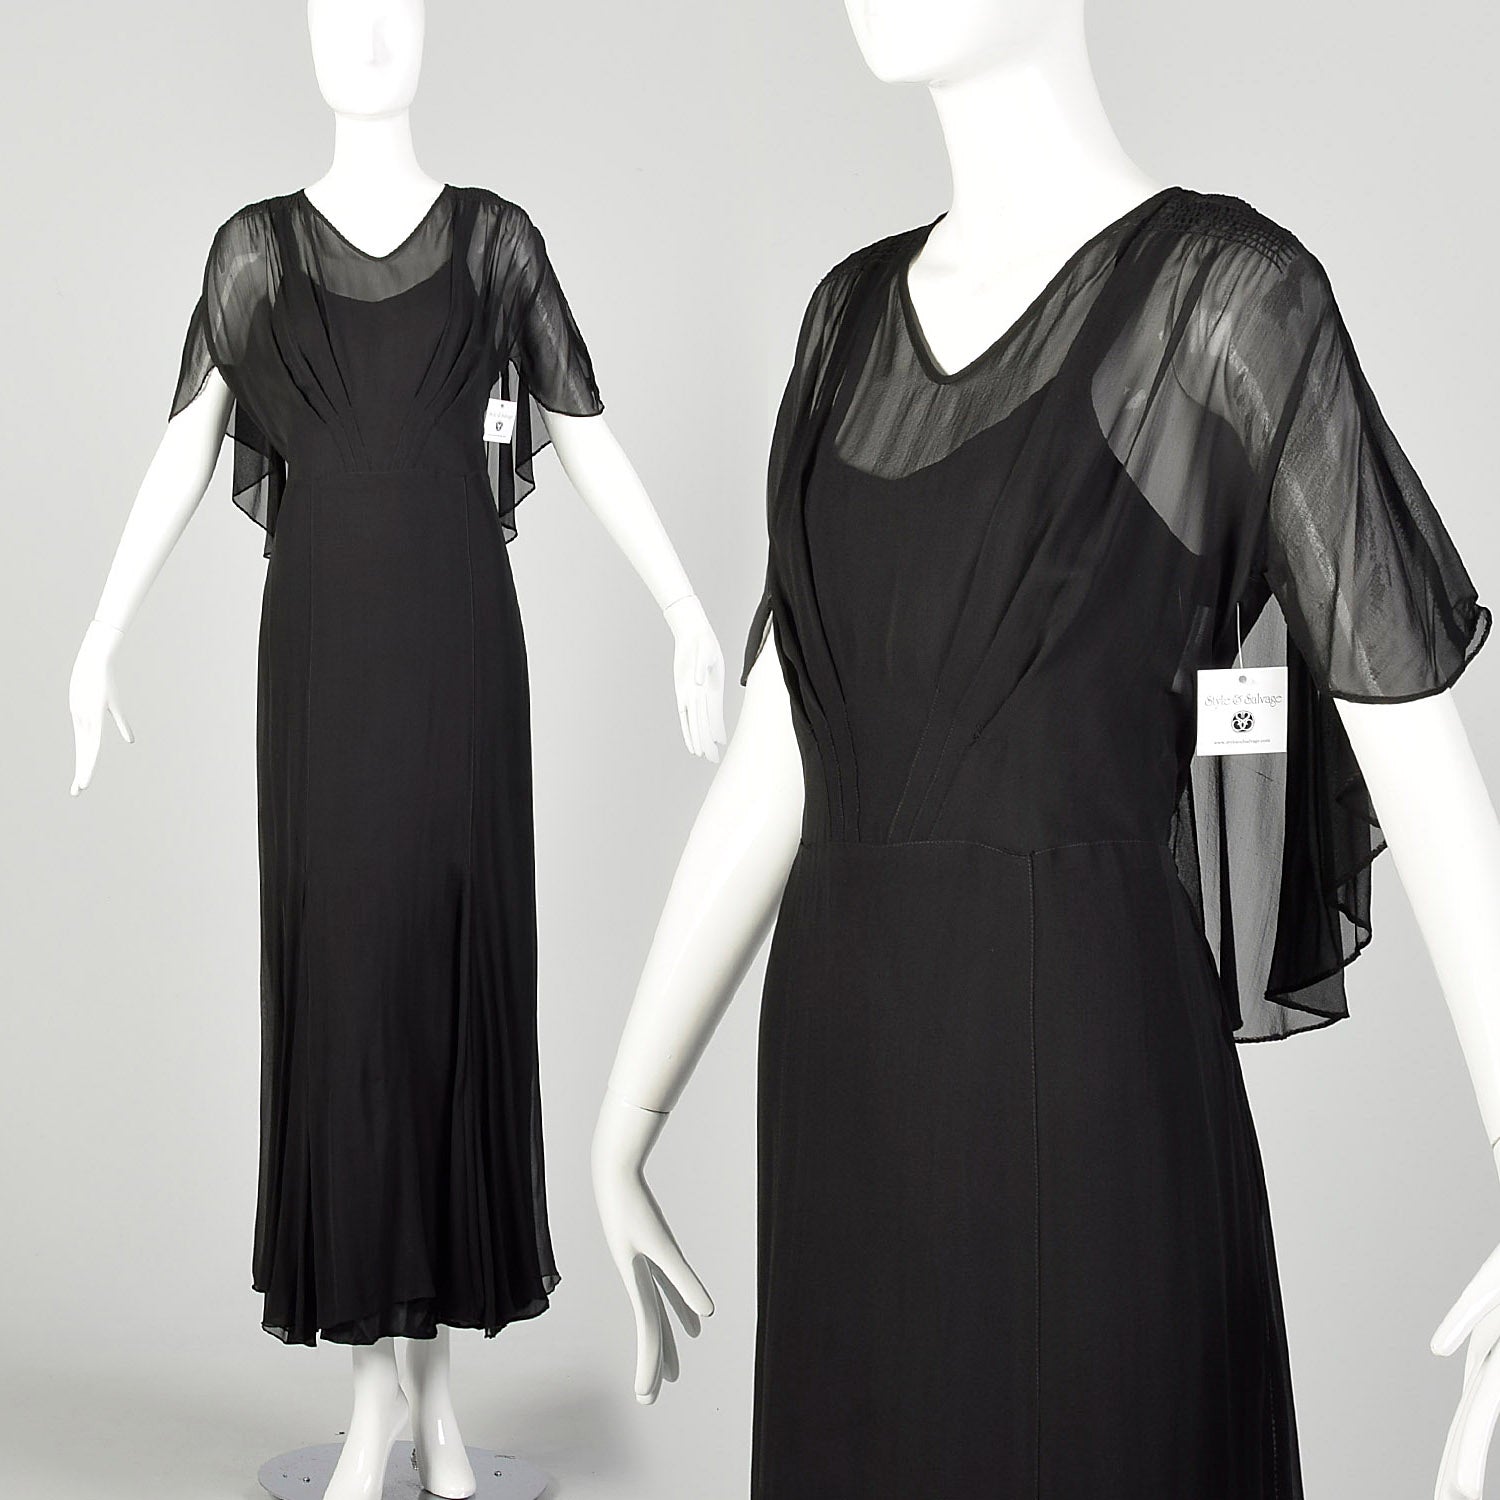 Sheer Black Dress  Black sheer dress, Black dress, Little black dress